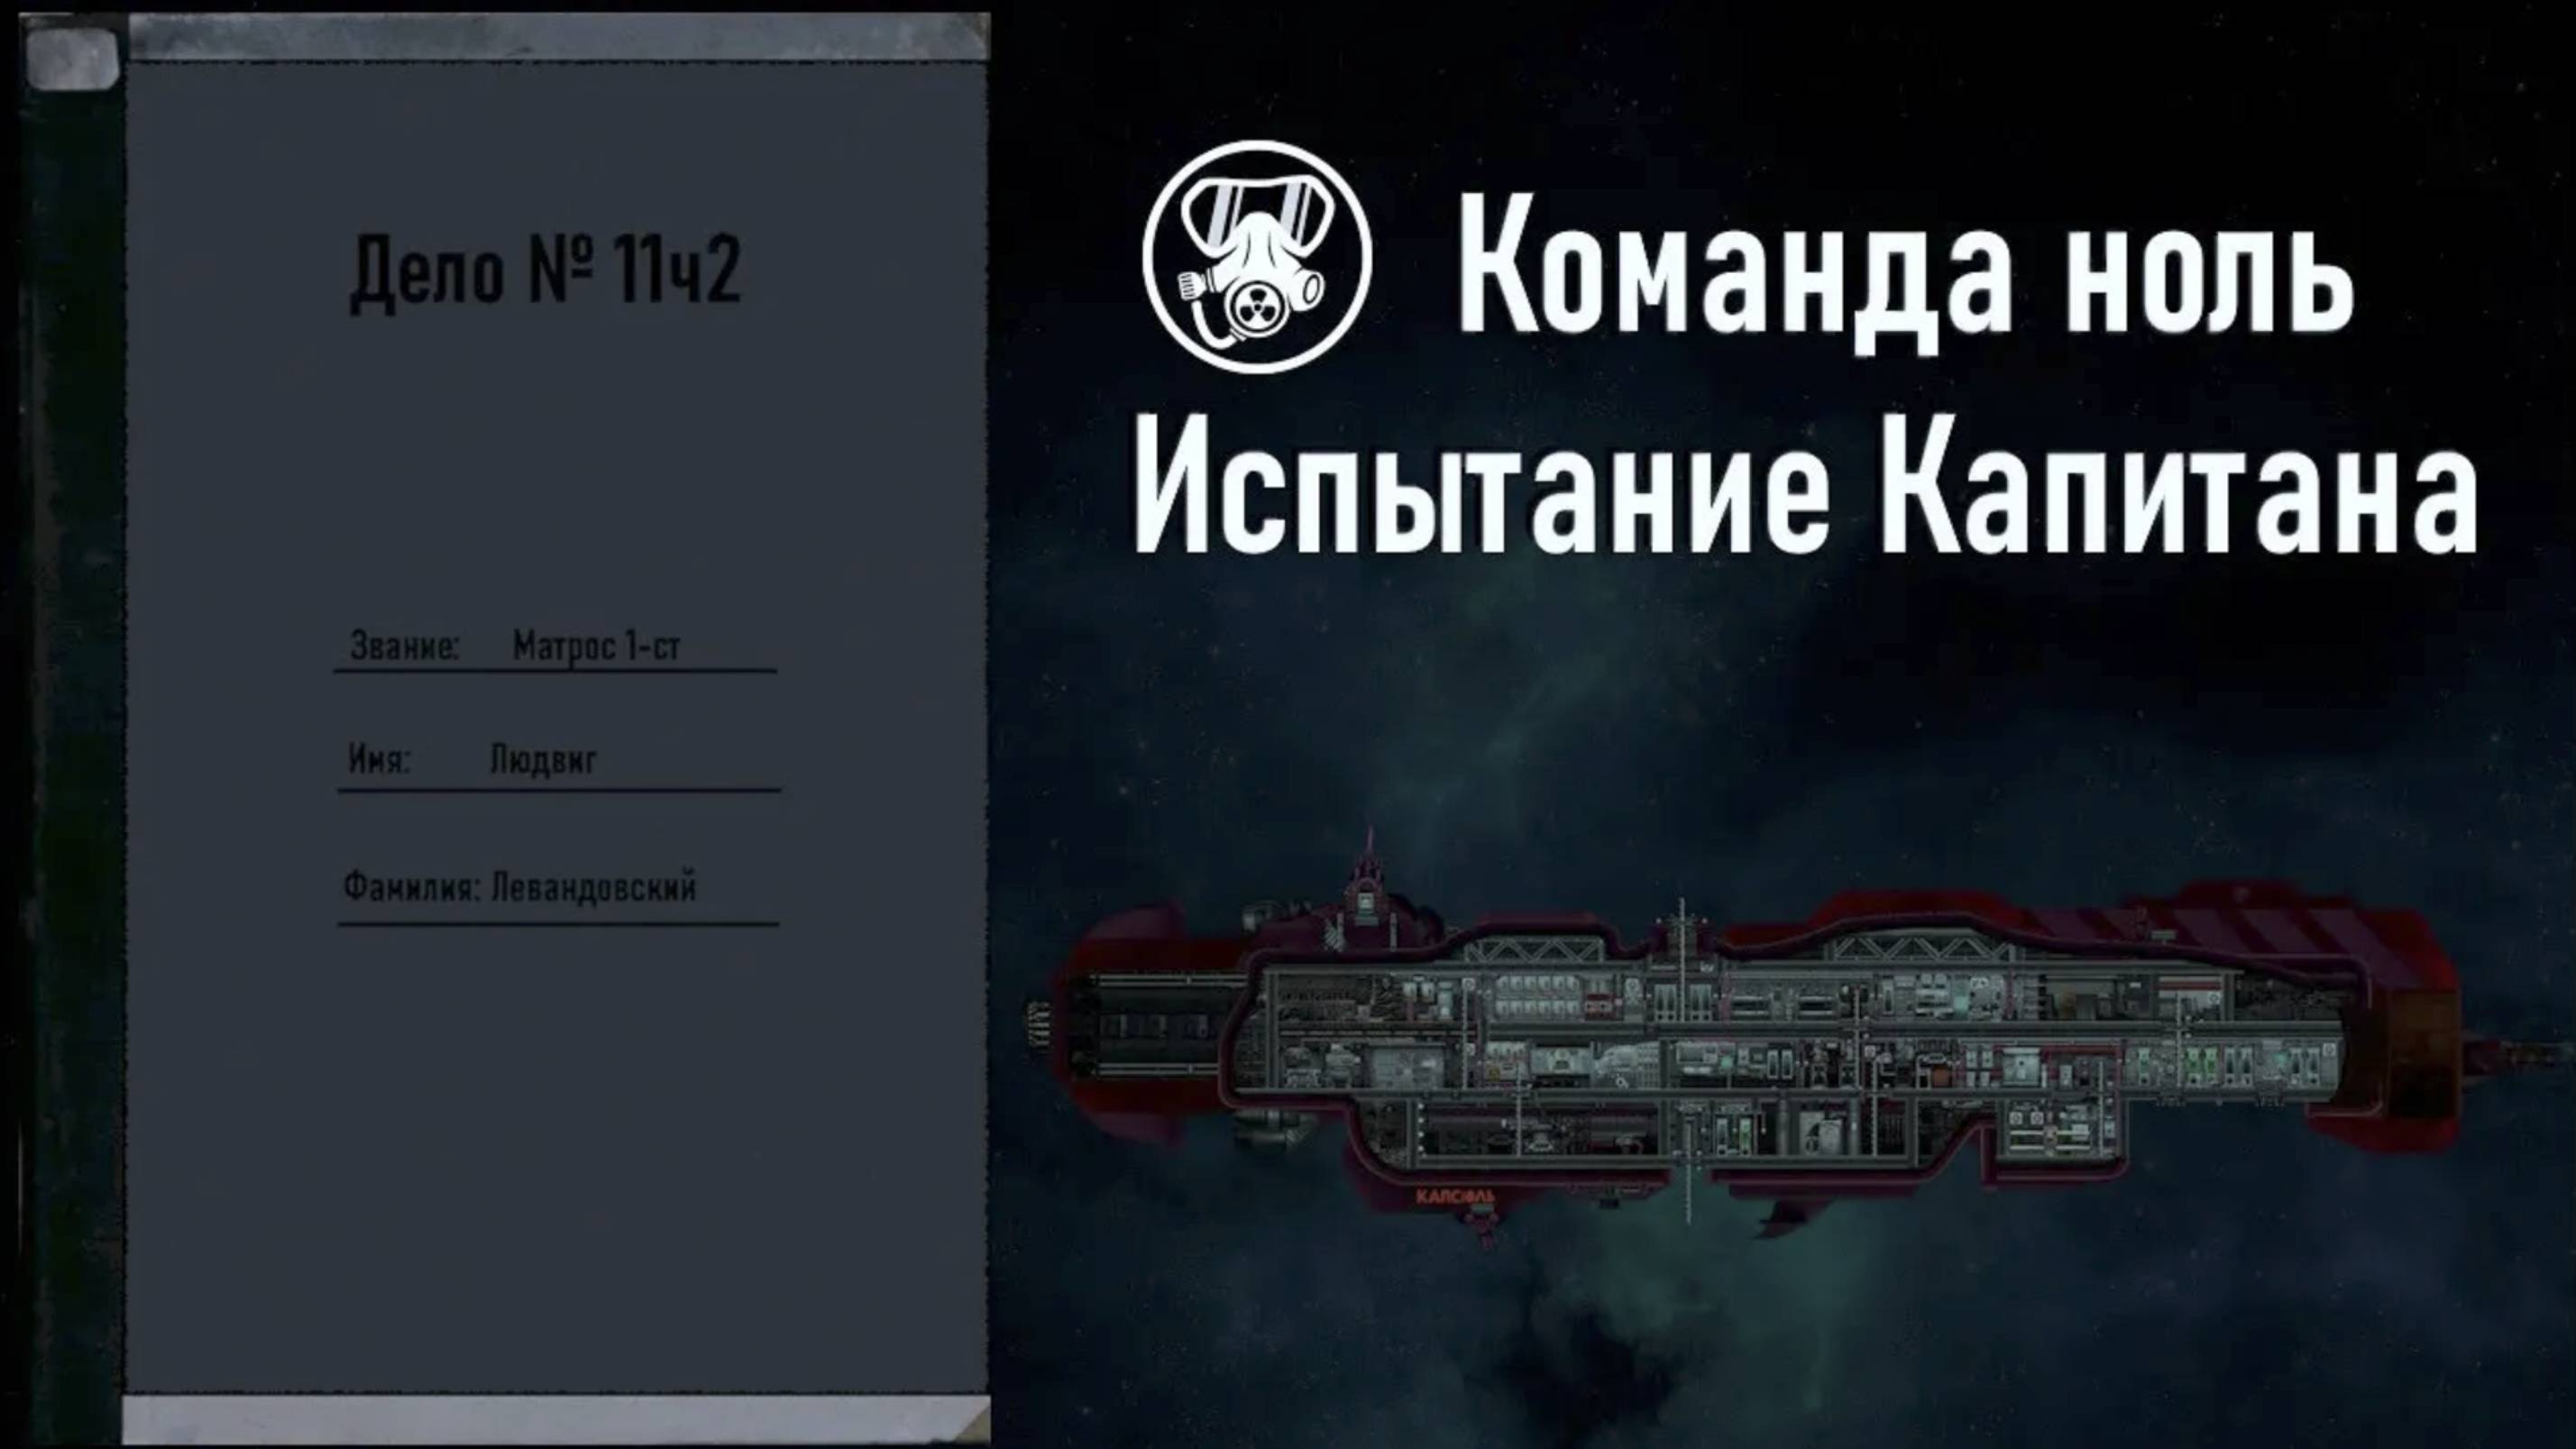 Капитан Левандовский (ч.2) - Испытание Капитана 11 - Команда Ноль (Barotrauma)